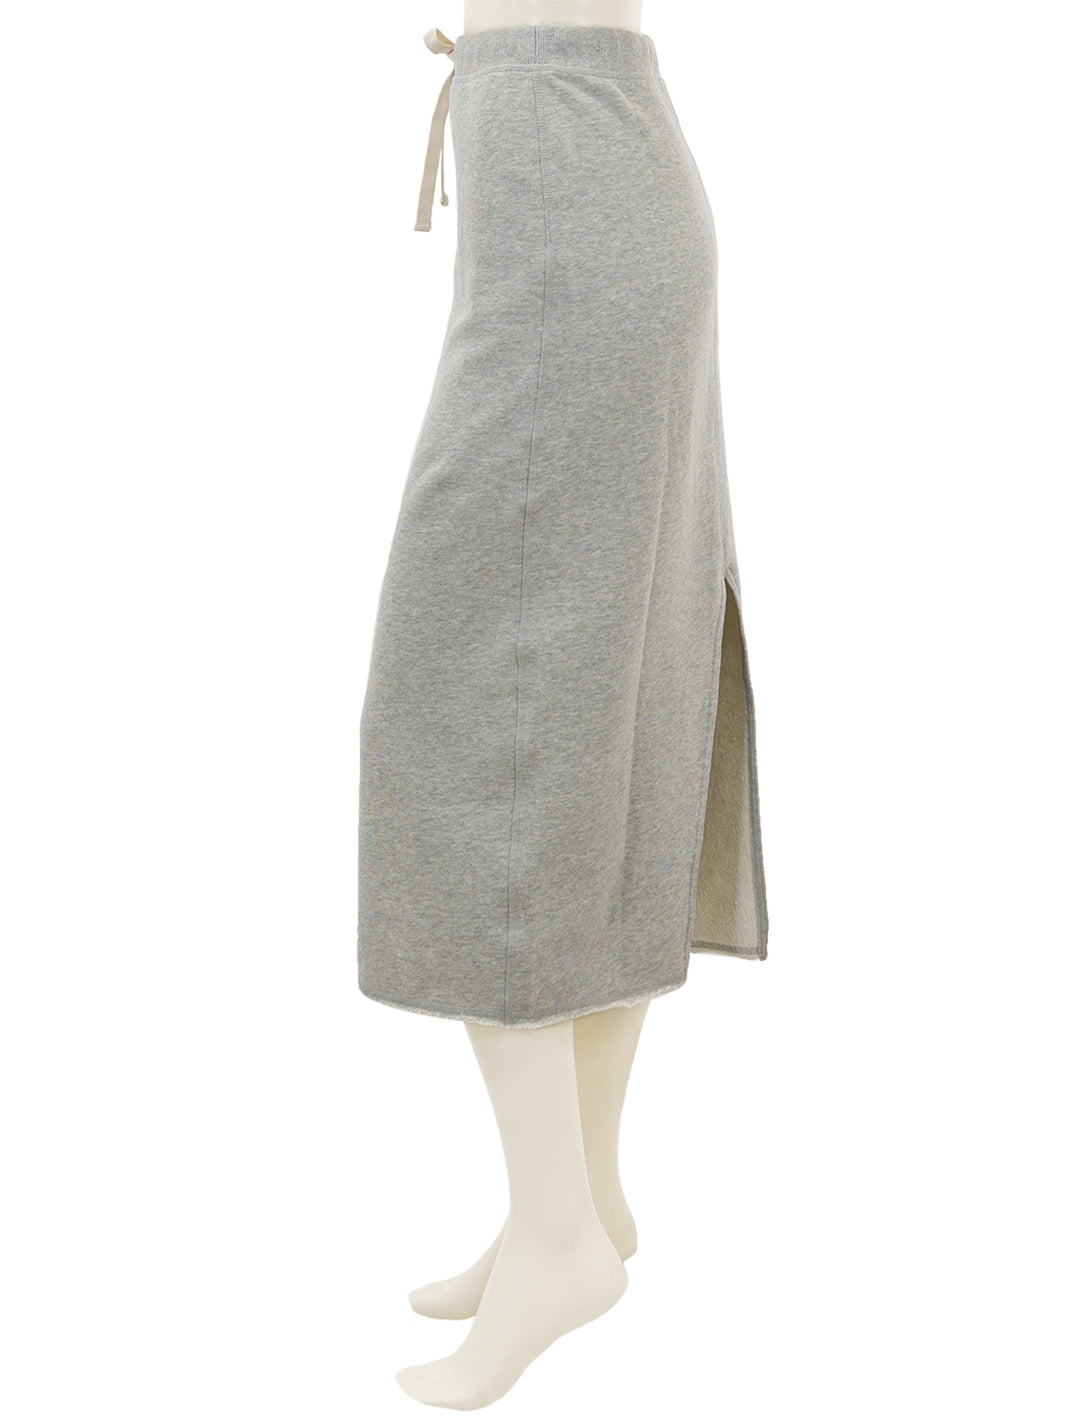 Side view of Rag & Bone's vintage terry midi skirt in heather grey.